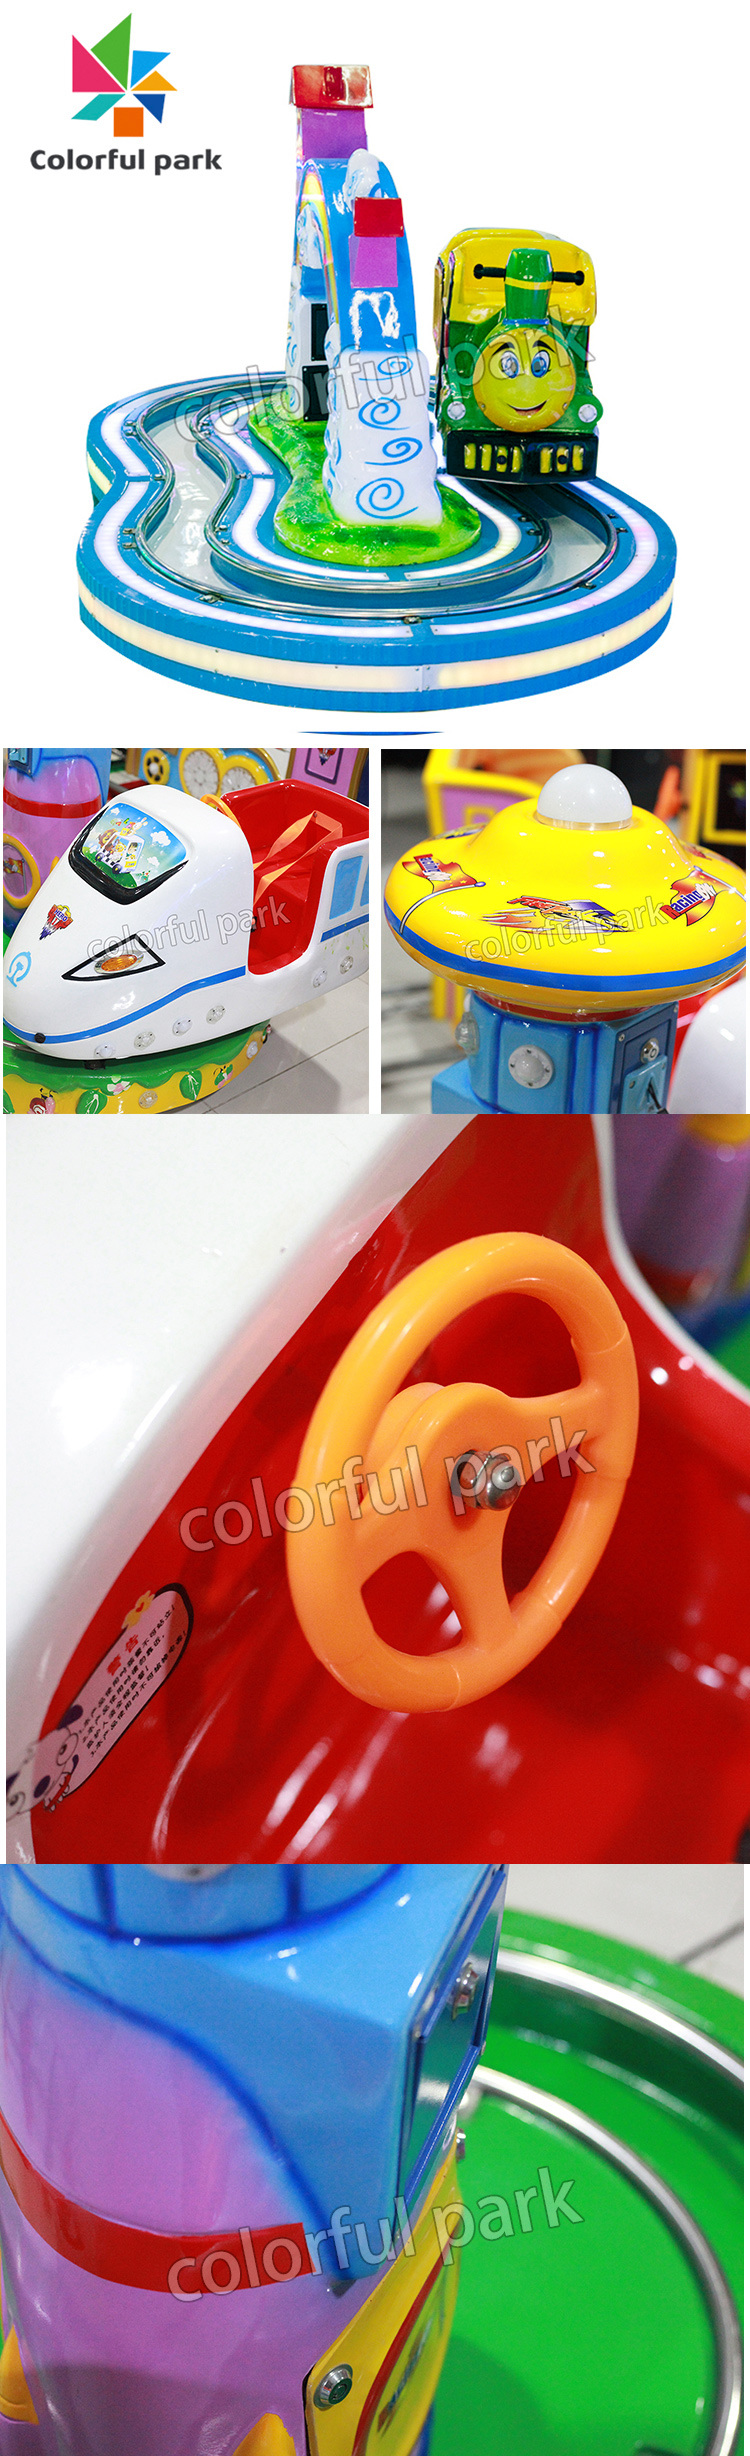 Colorful Park Electric Amusement Mini Track Train for Kids Riding